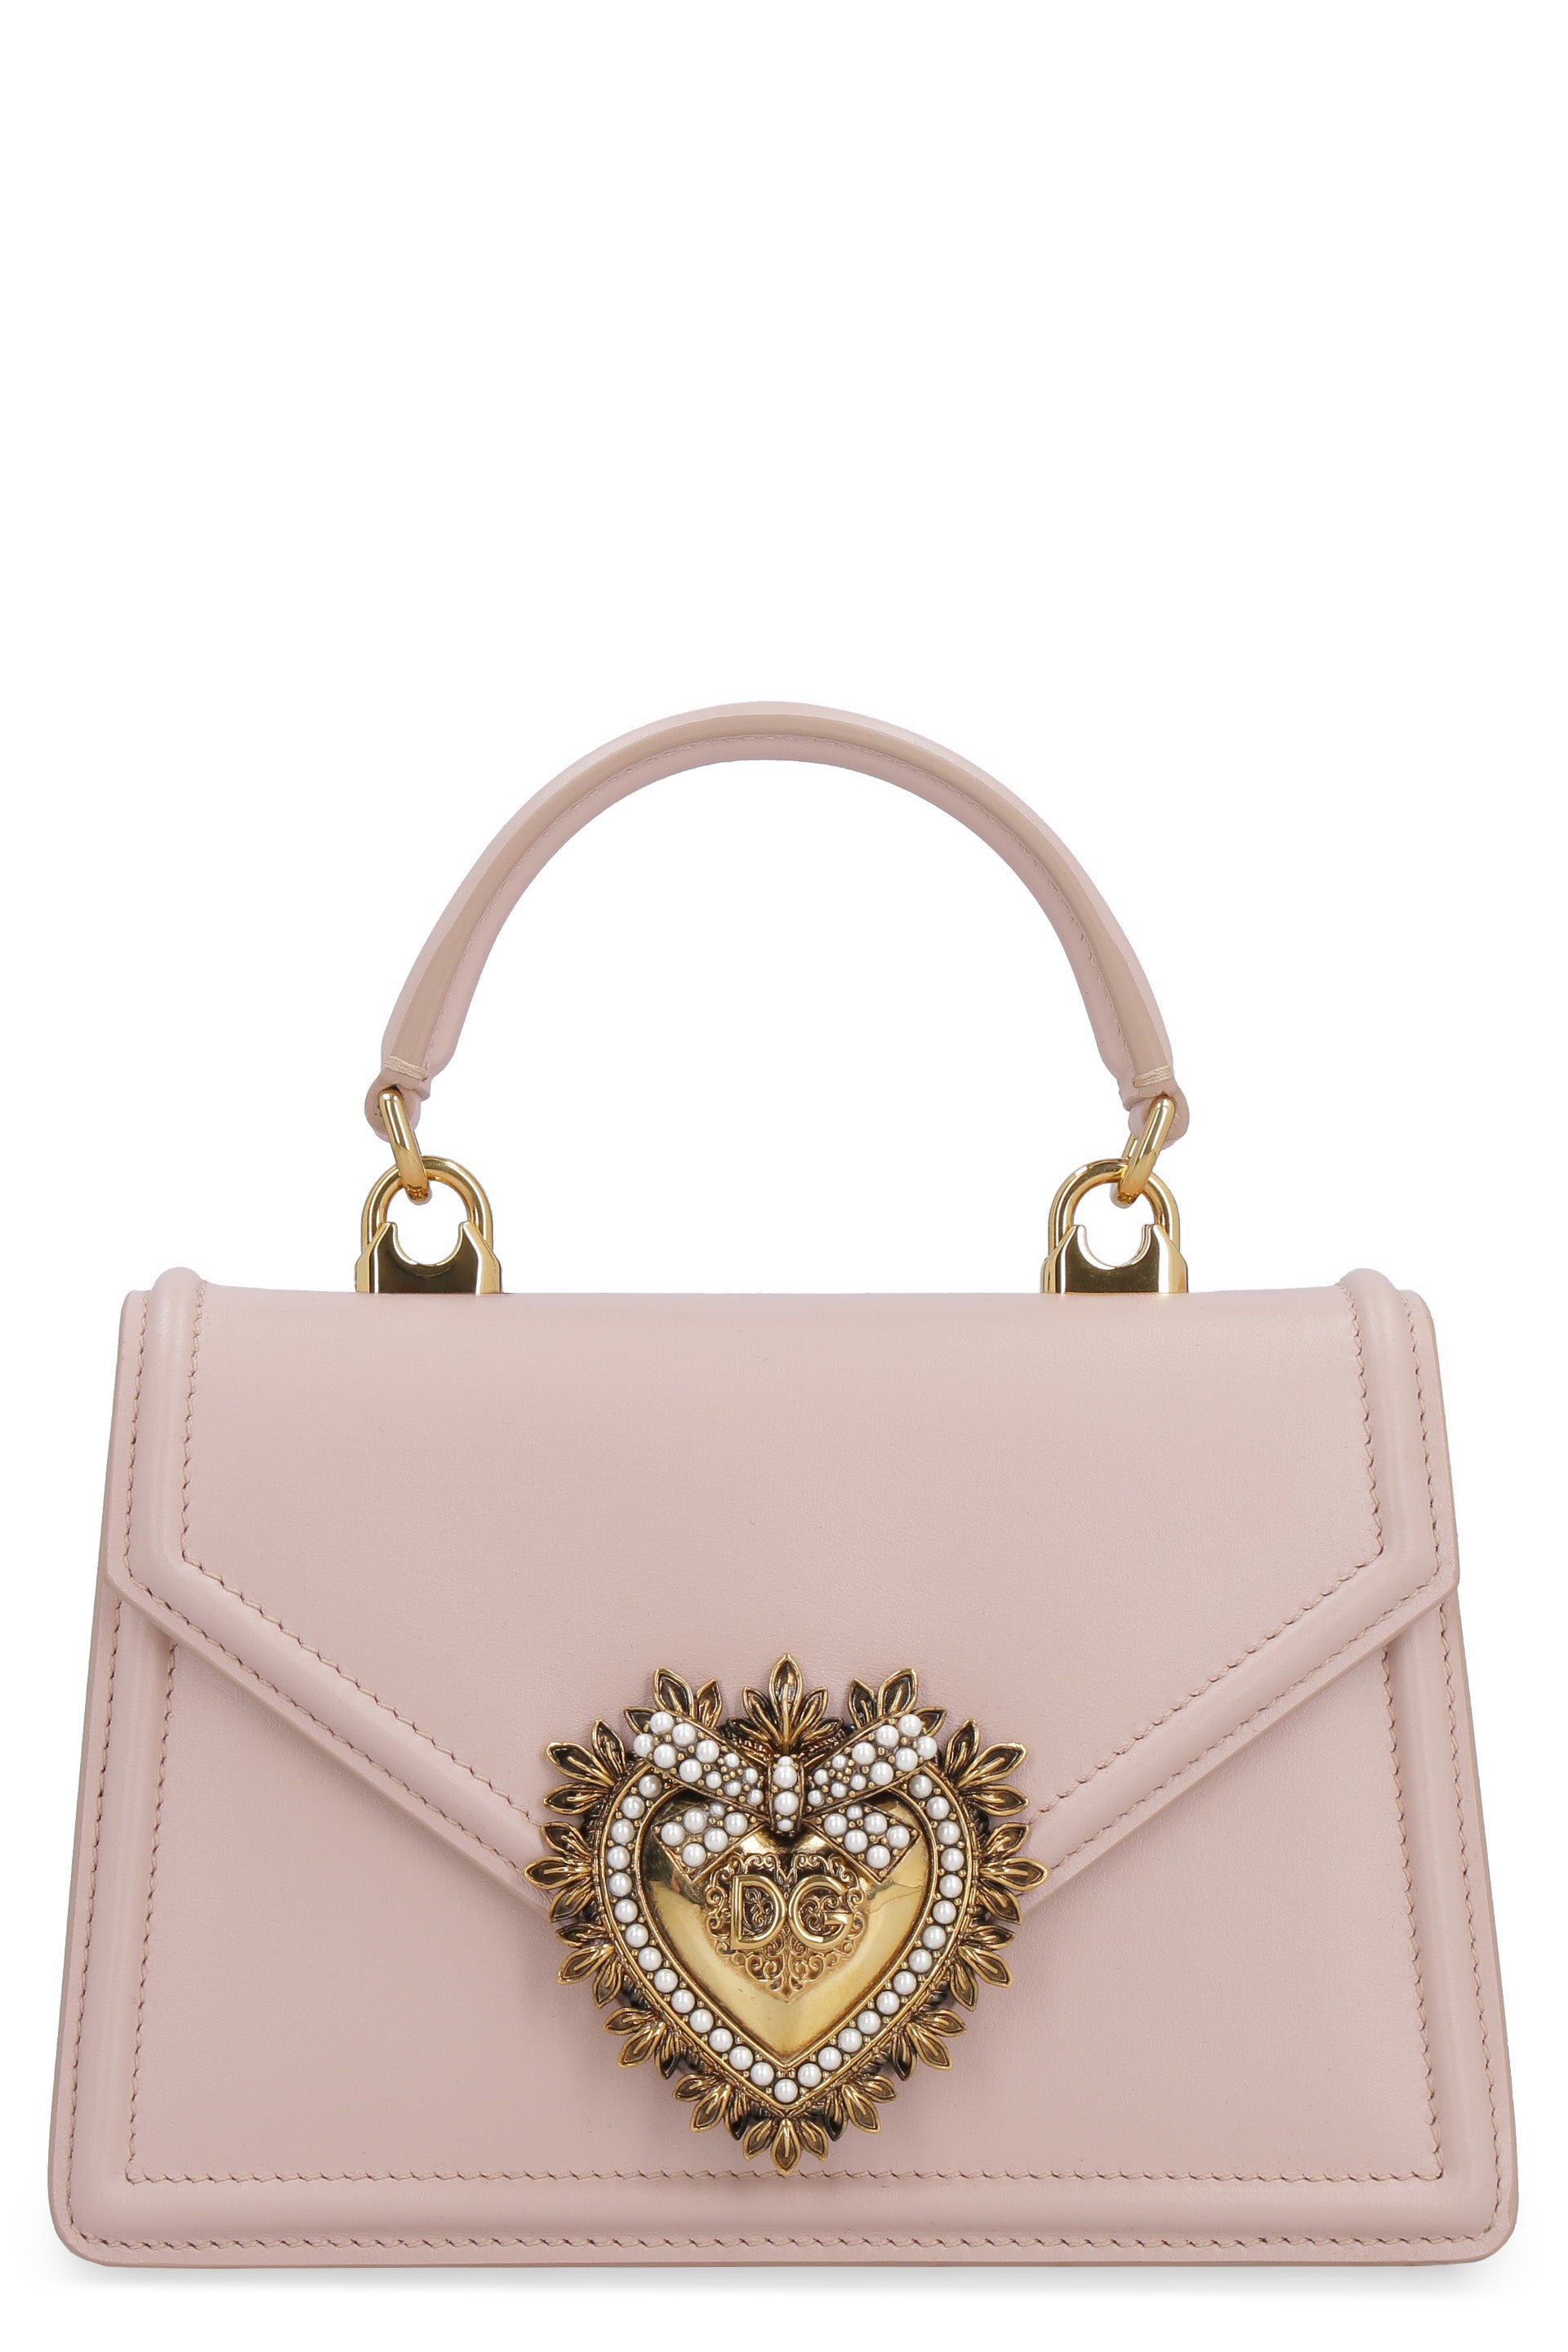 Shop Dolce & Gabbana Luxurious Pale Pink Mini Handbag For Women